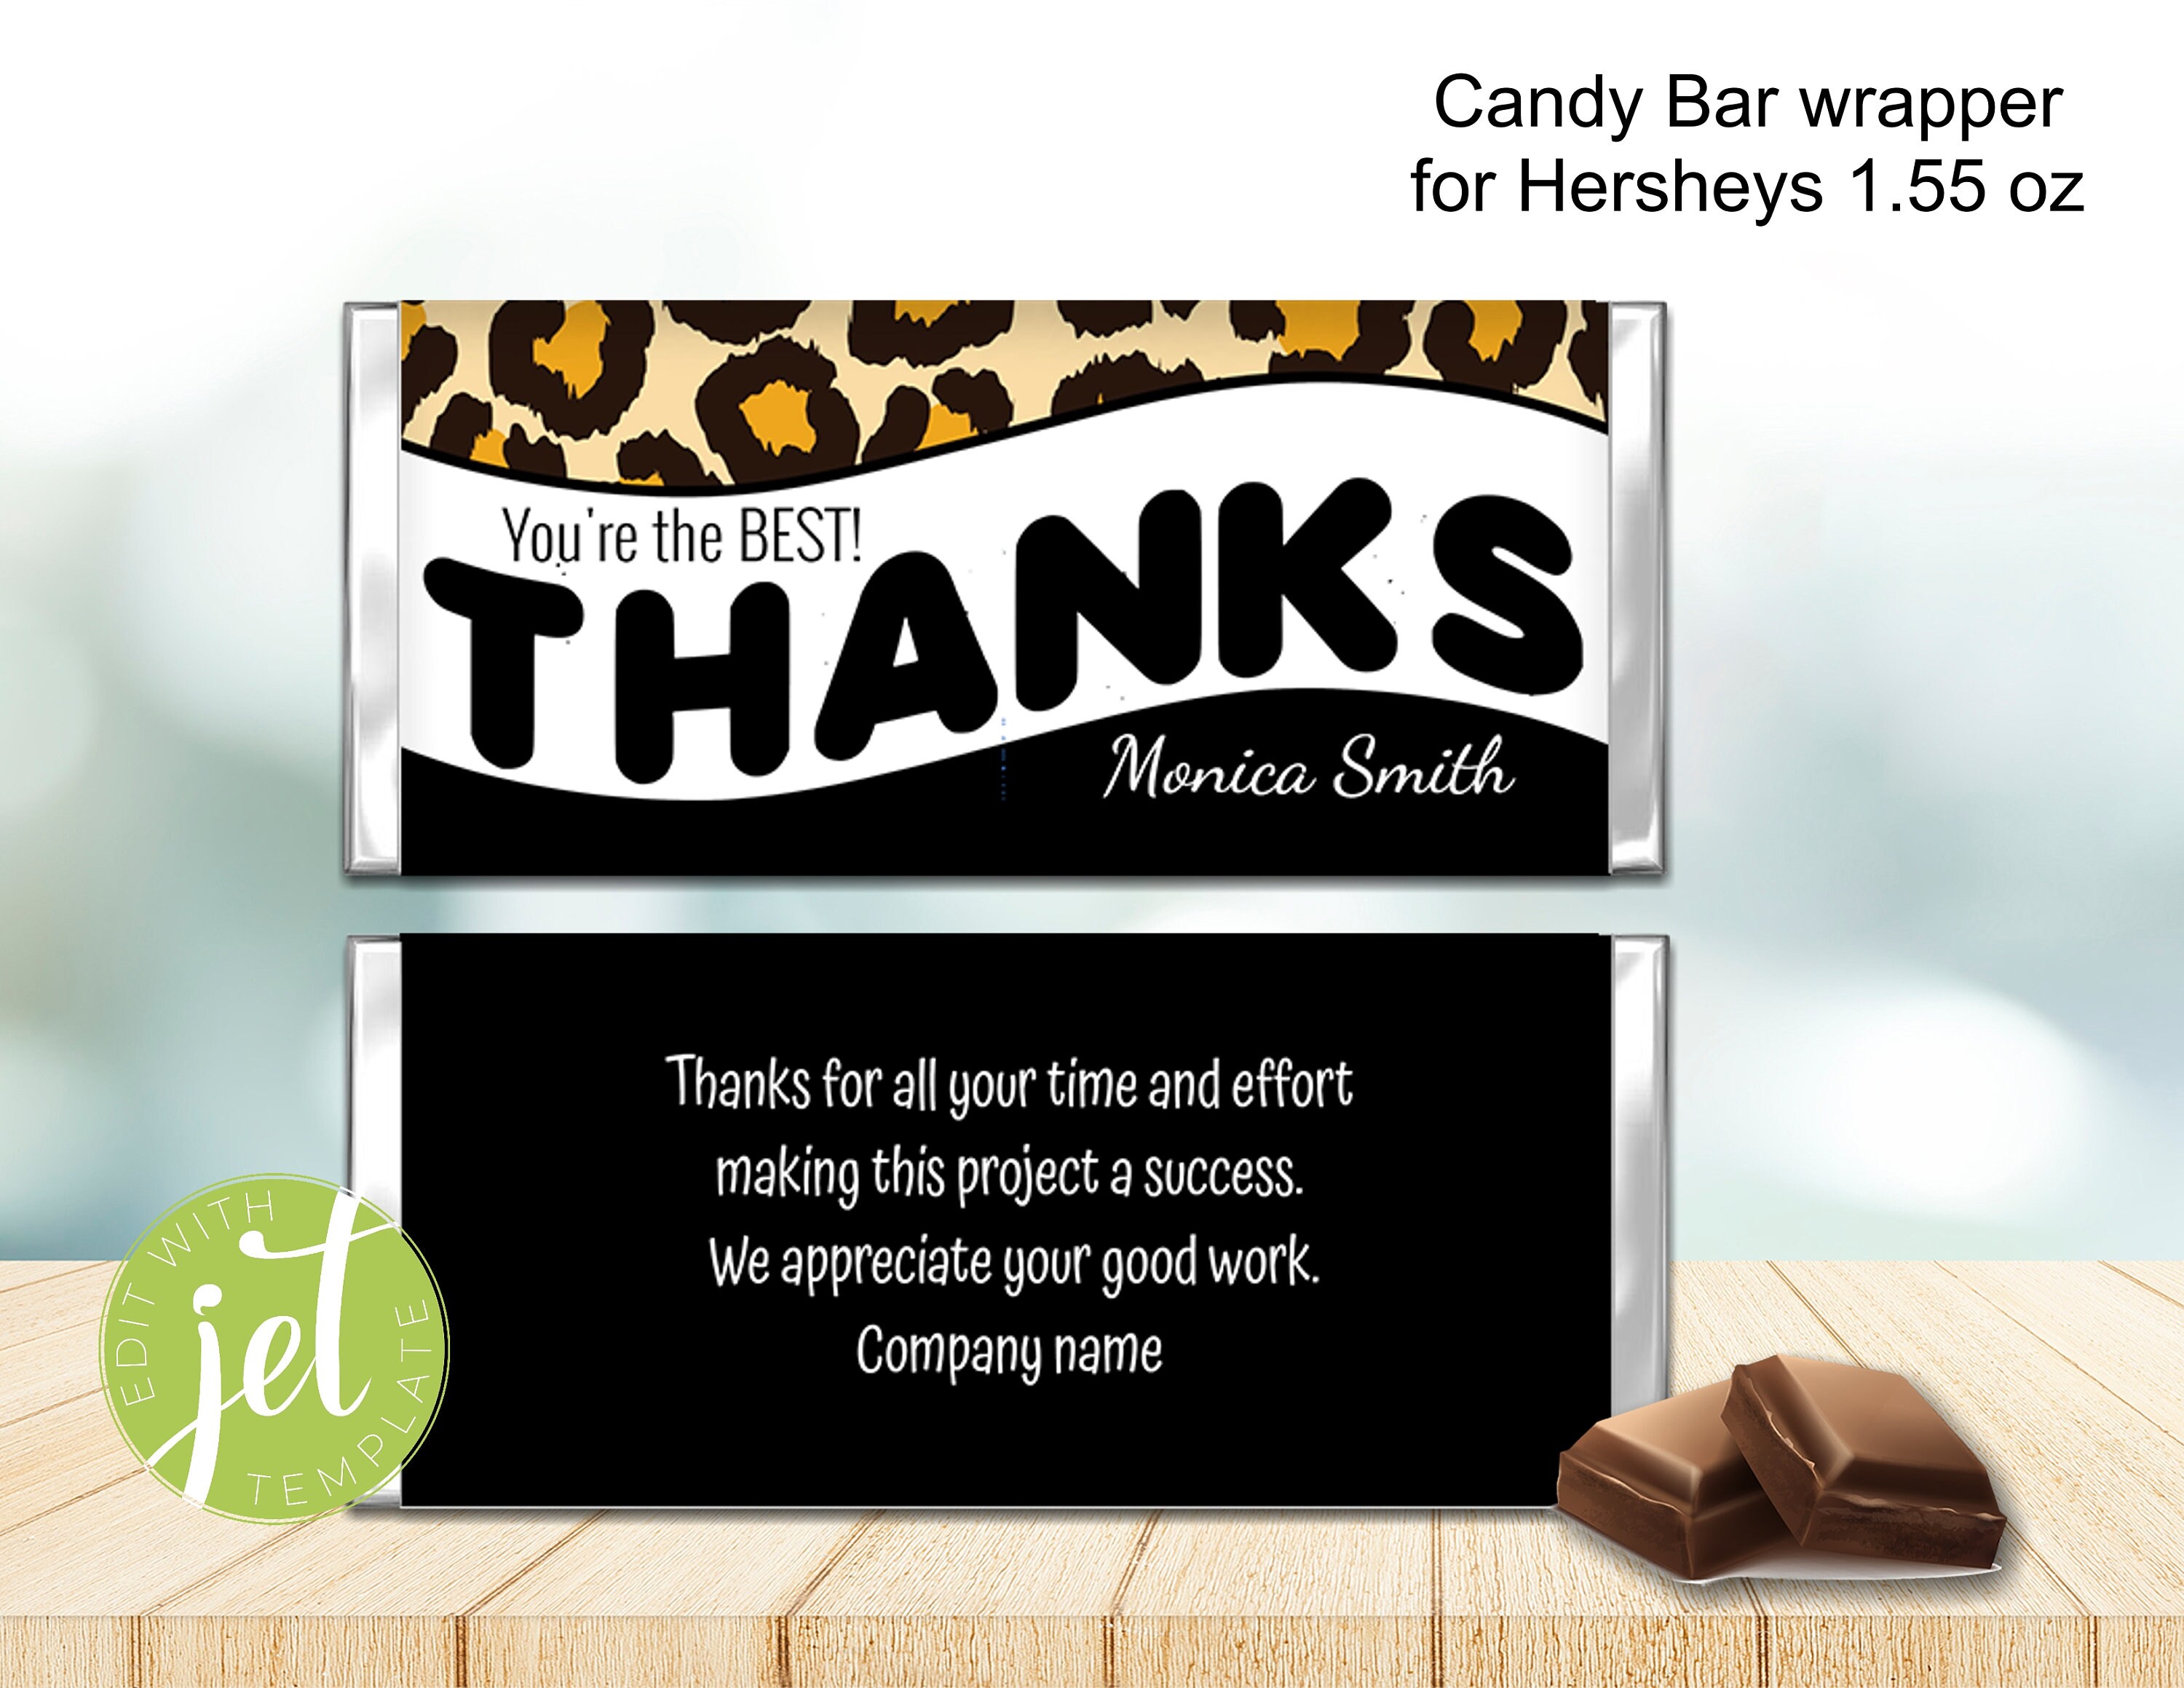 Hershey's Money Candy Bar Wrappers Chocolate Cash Dollar $20 $50 $100  Hershey